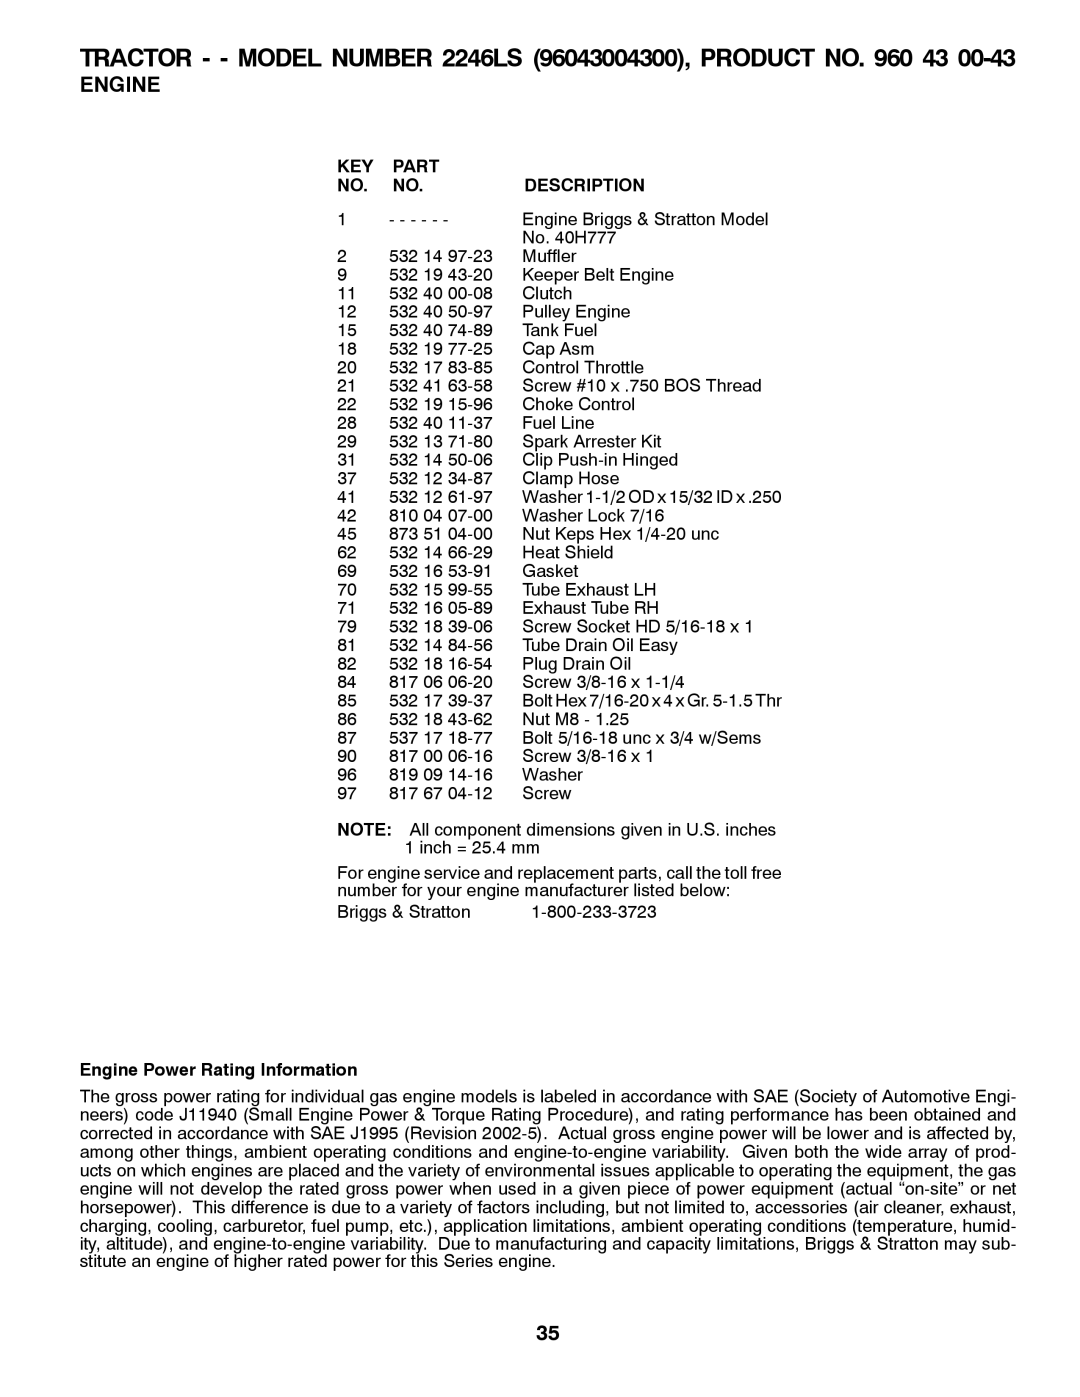 Husqvarna owner manual Engine, TRACTOR - - MODEL NUMBER 2246LS 96043004300, PRODUCT NO. 960 43, Part, Description 